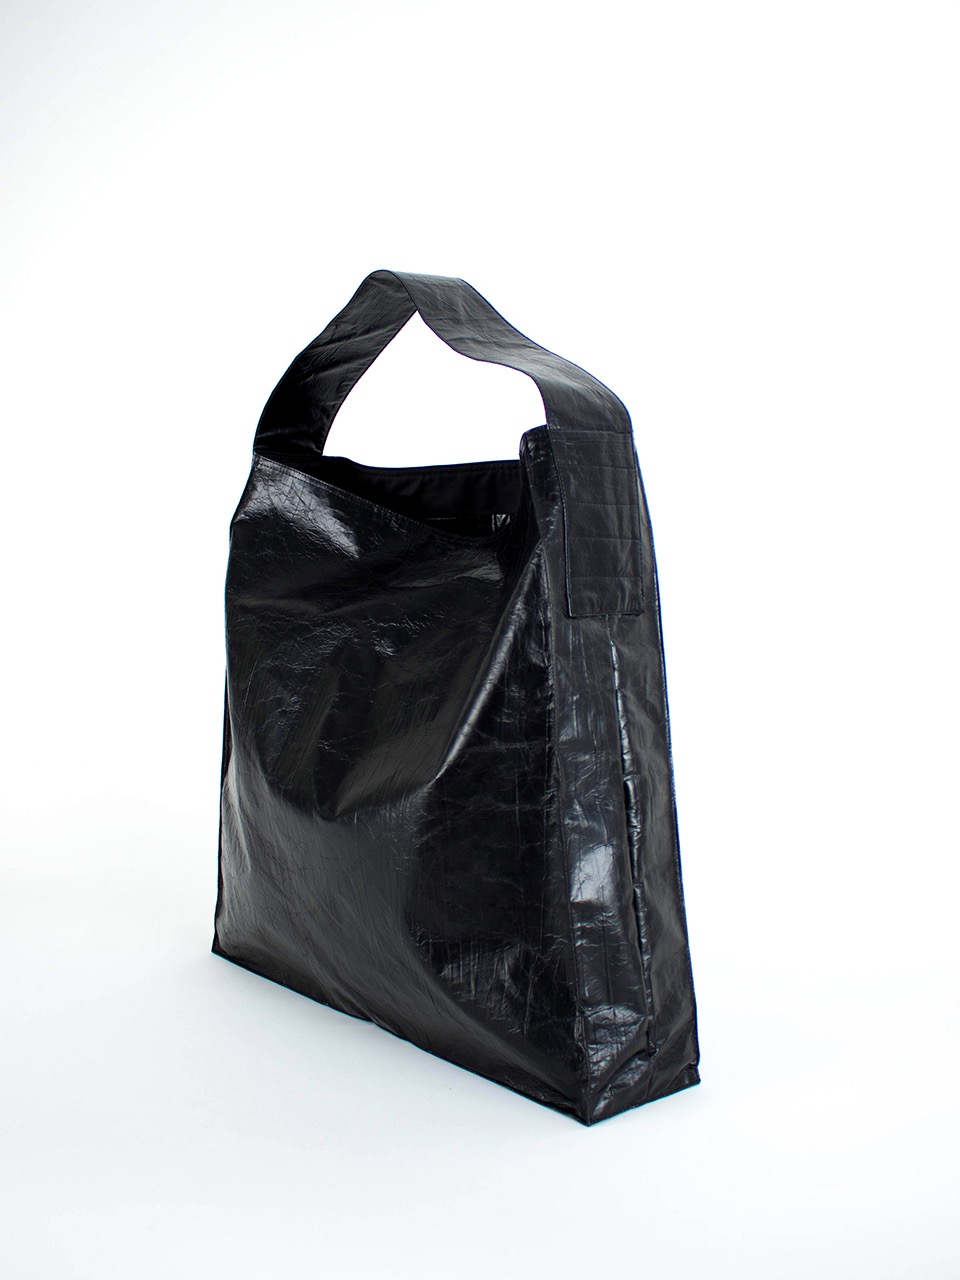 ANYTIME LOREAK - BIG SHOULDER BAG VER.2 (BLACK)